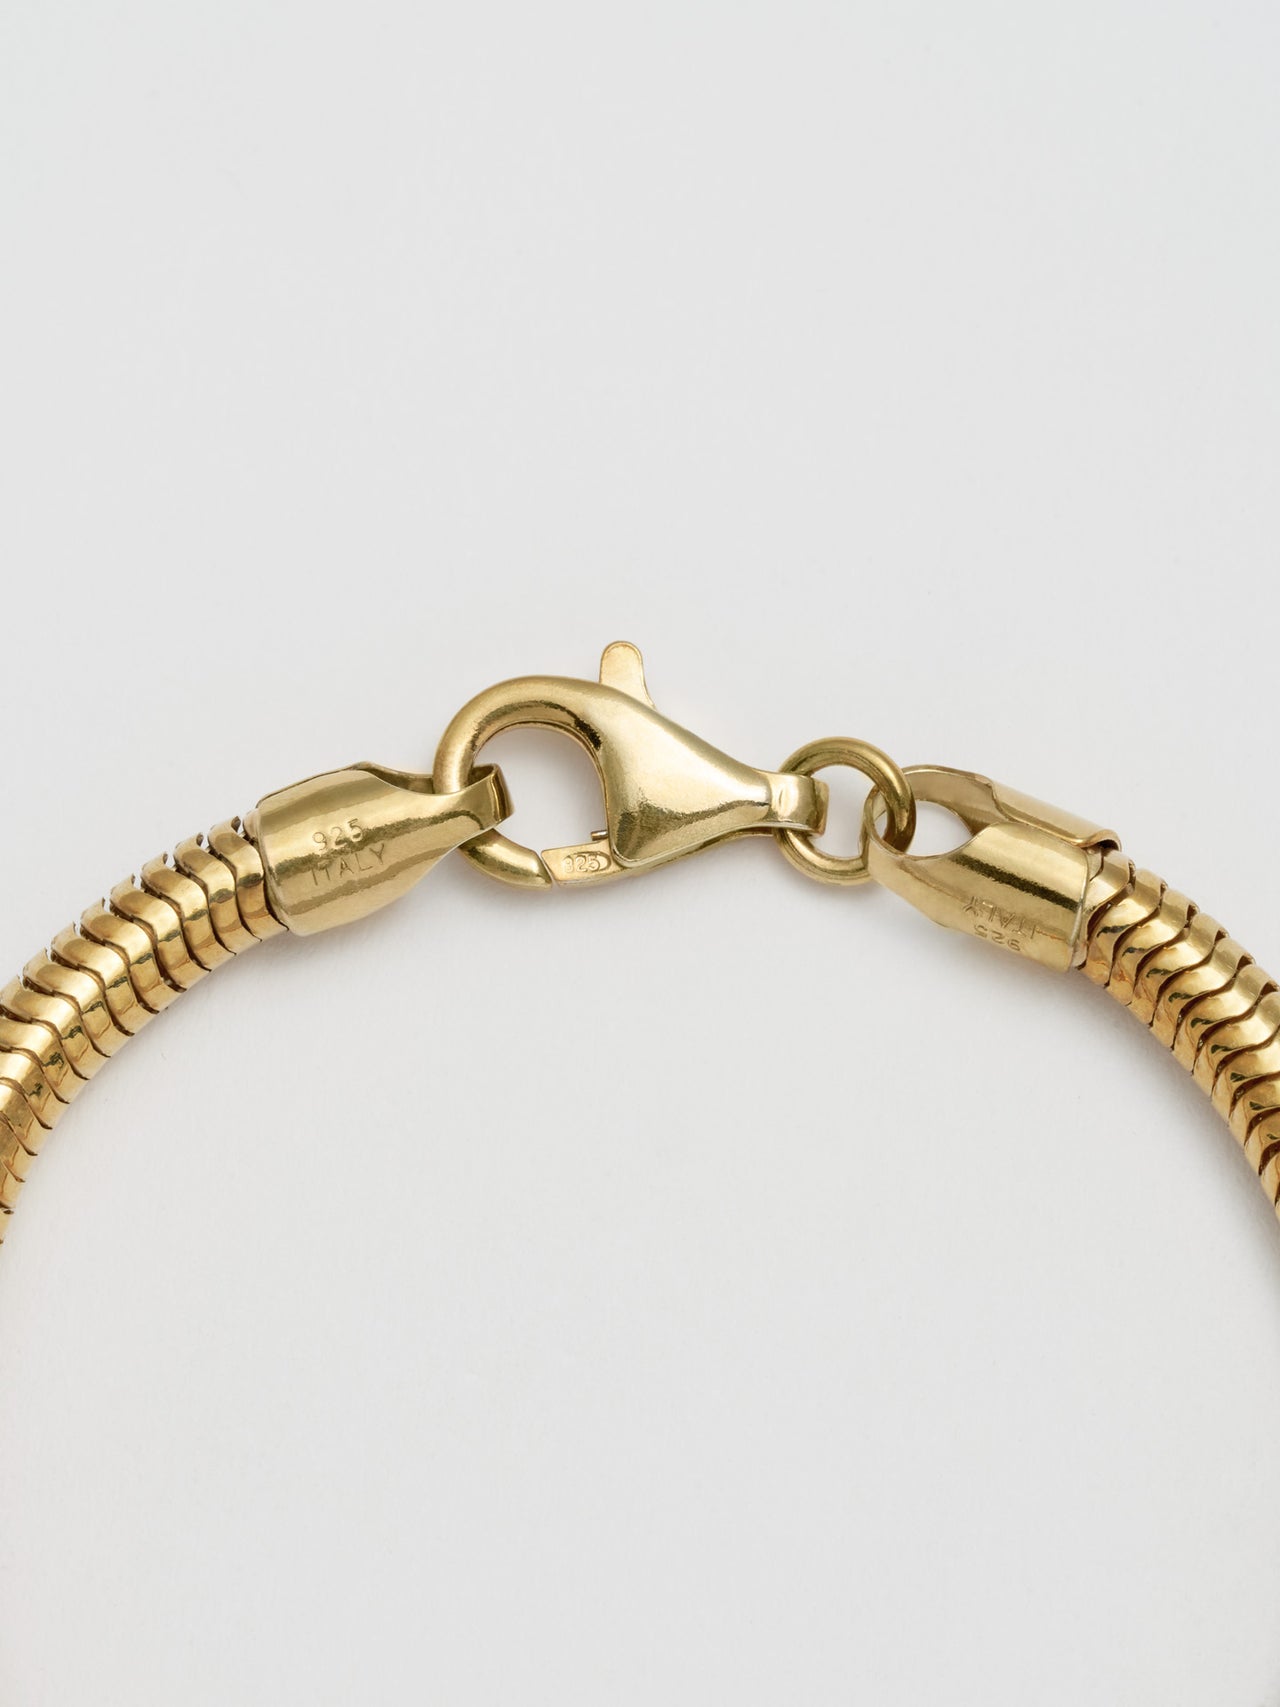 Vermeil Hollow Zenith Bracelet: Snake Chain Width: 5mm  Length: 7mm